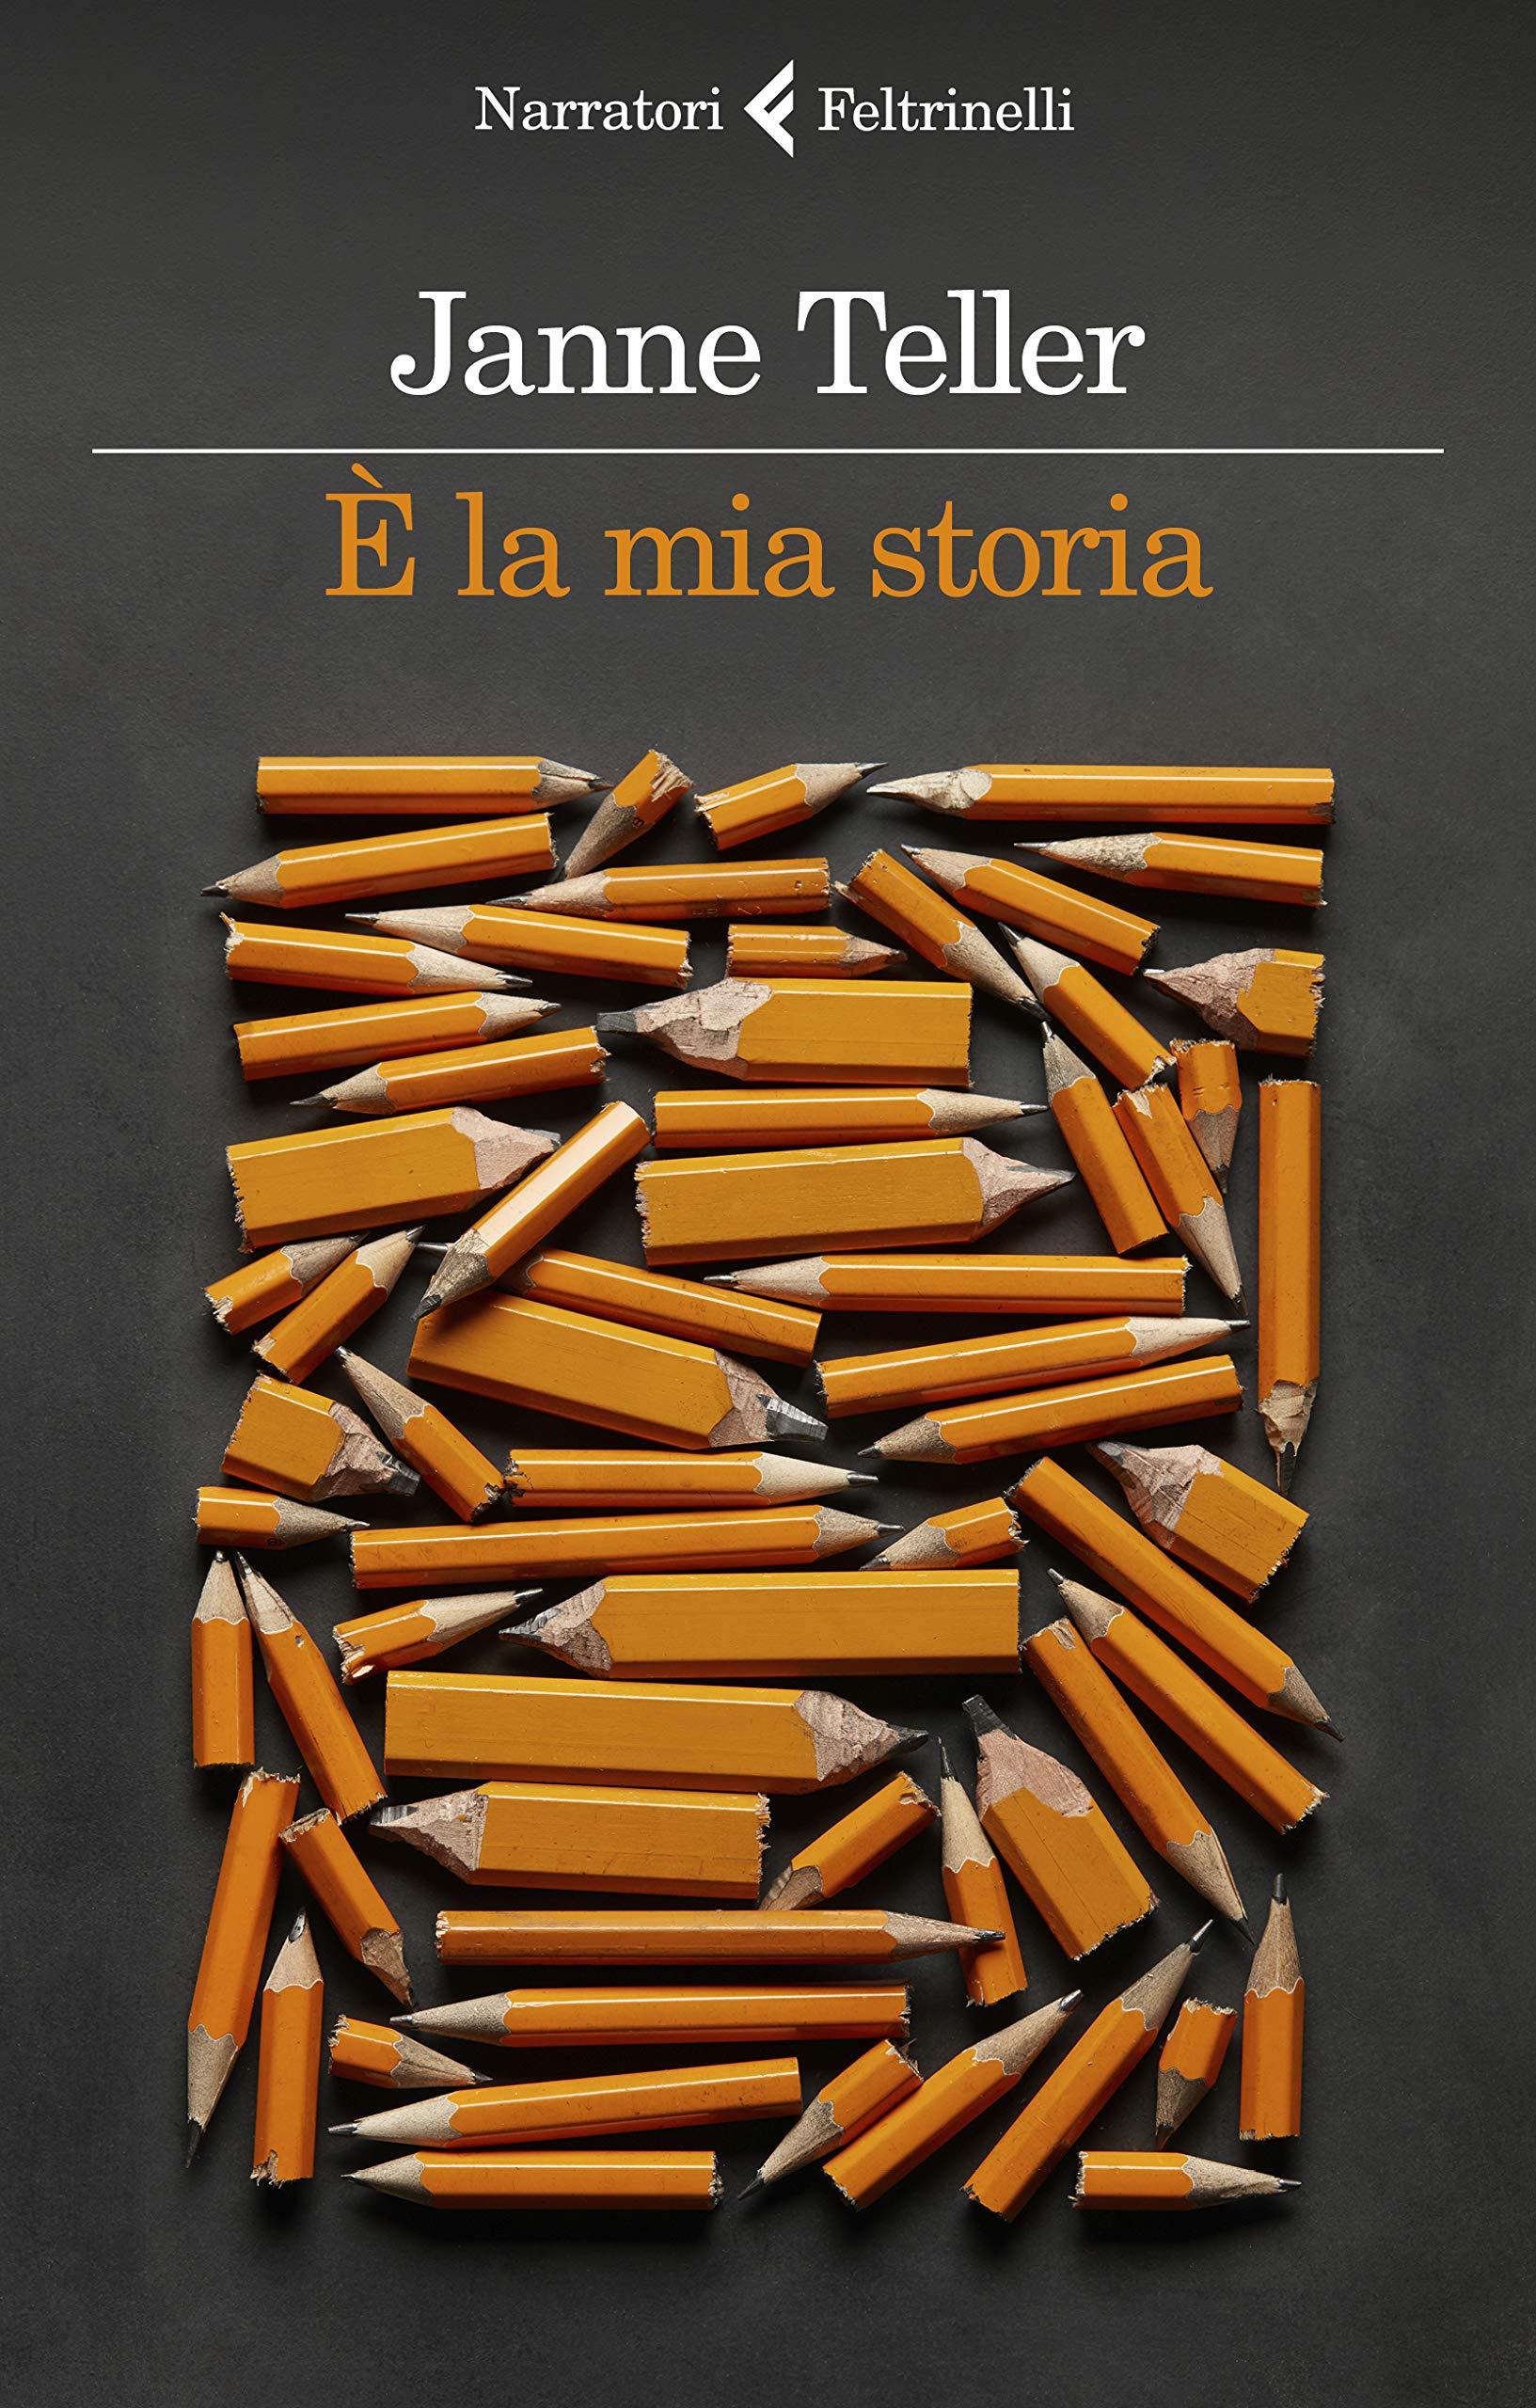 È LA MIA STORIA di Janne Teller, traduzione di Maria Valeria D’Avino, Feltrinelli